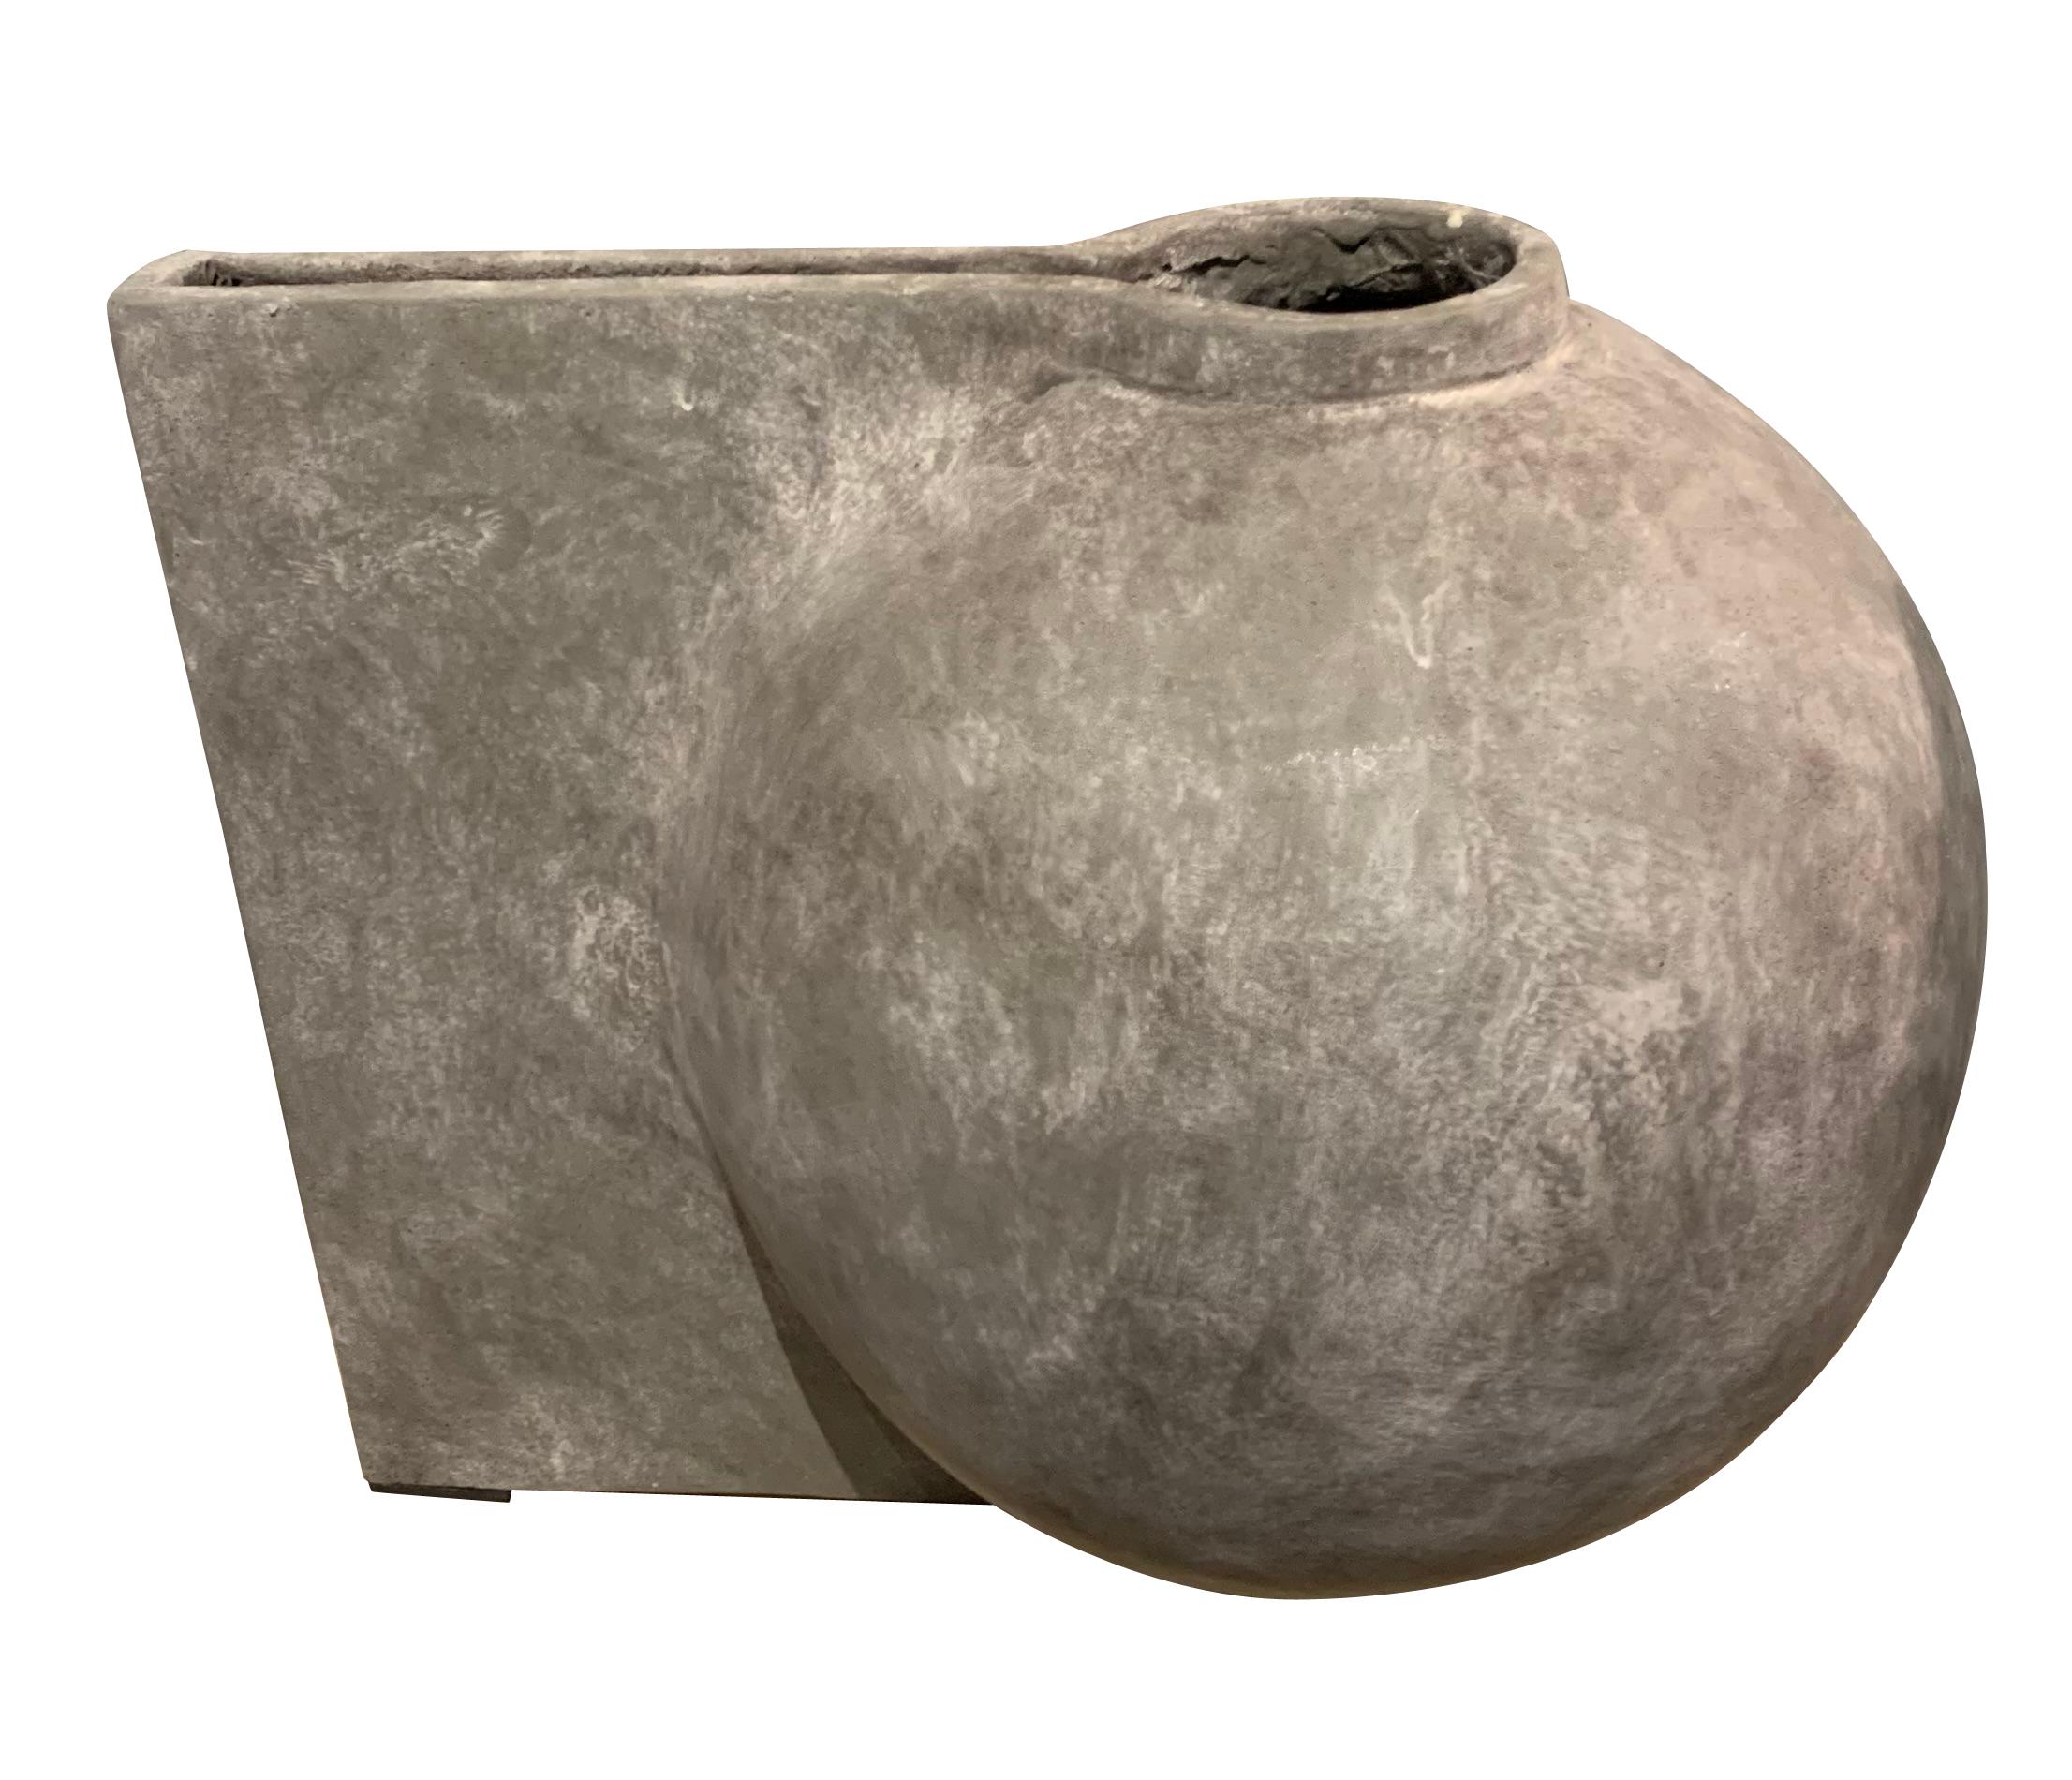 Contemporary Chinese Danish designed large matte dark grey vase.
Offset rectangular slab shaped handle.
Part of a large collection.